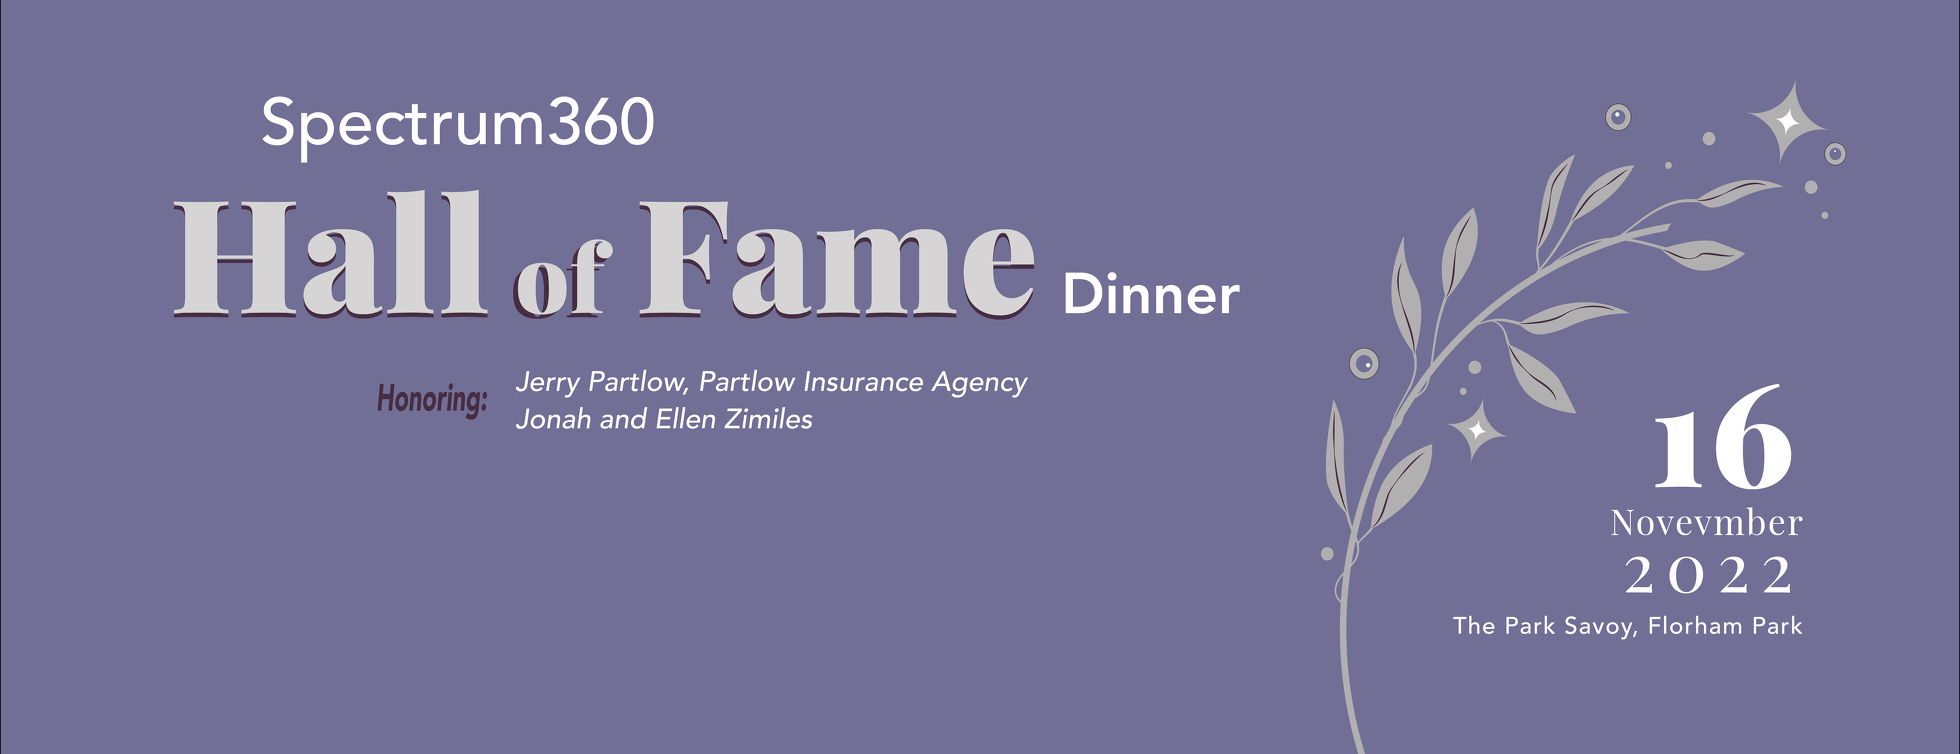 Spectrum360's Hall of Fame Dinner 2022